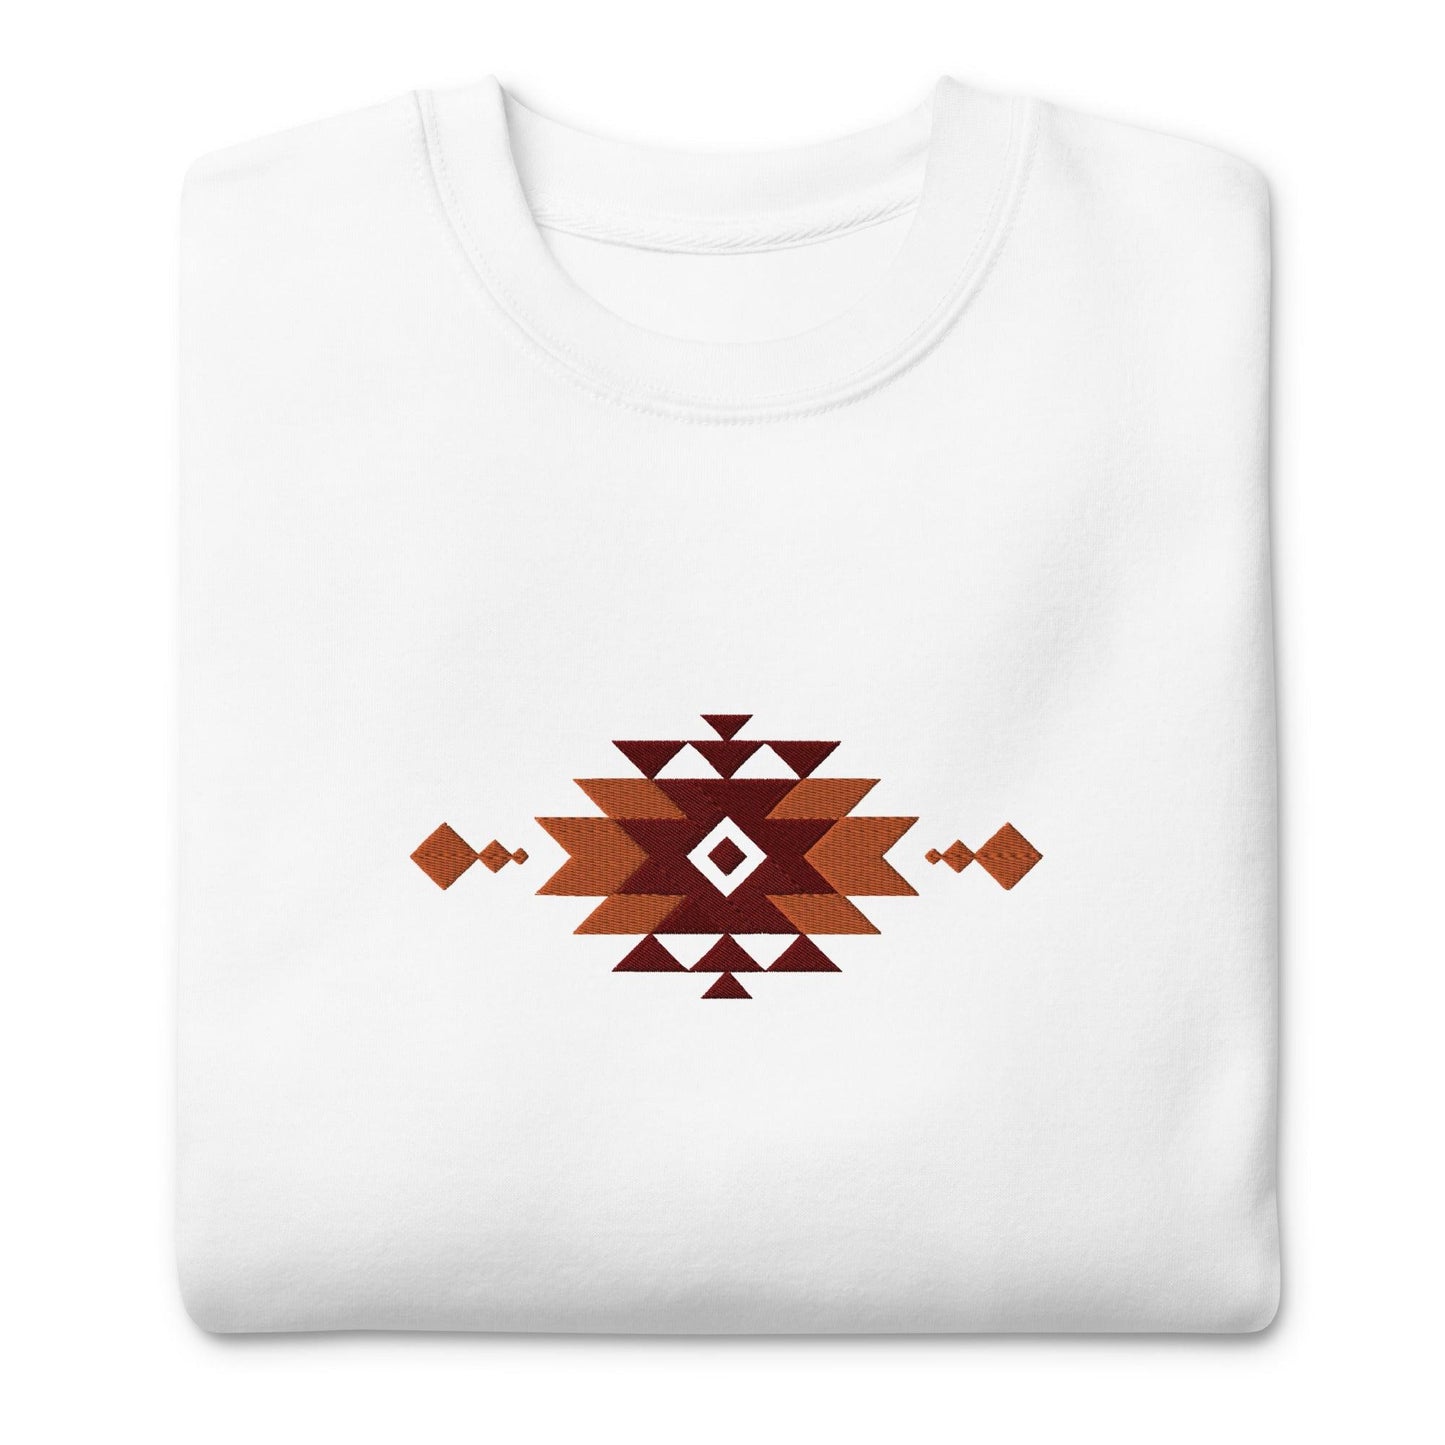 Southwestern Embroidered Sweatshirt - The Global Wanderer